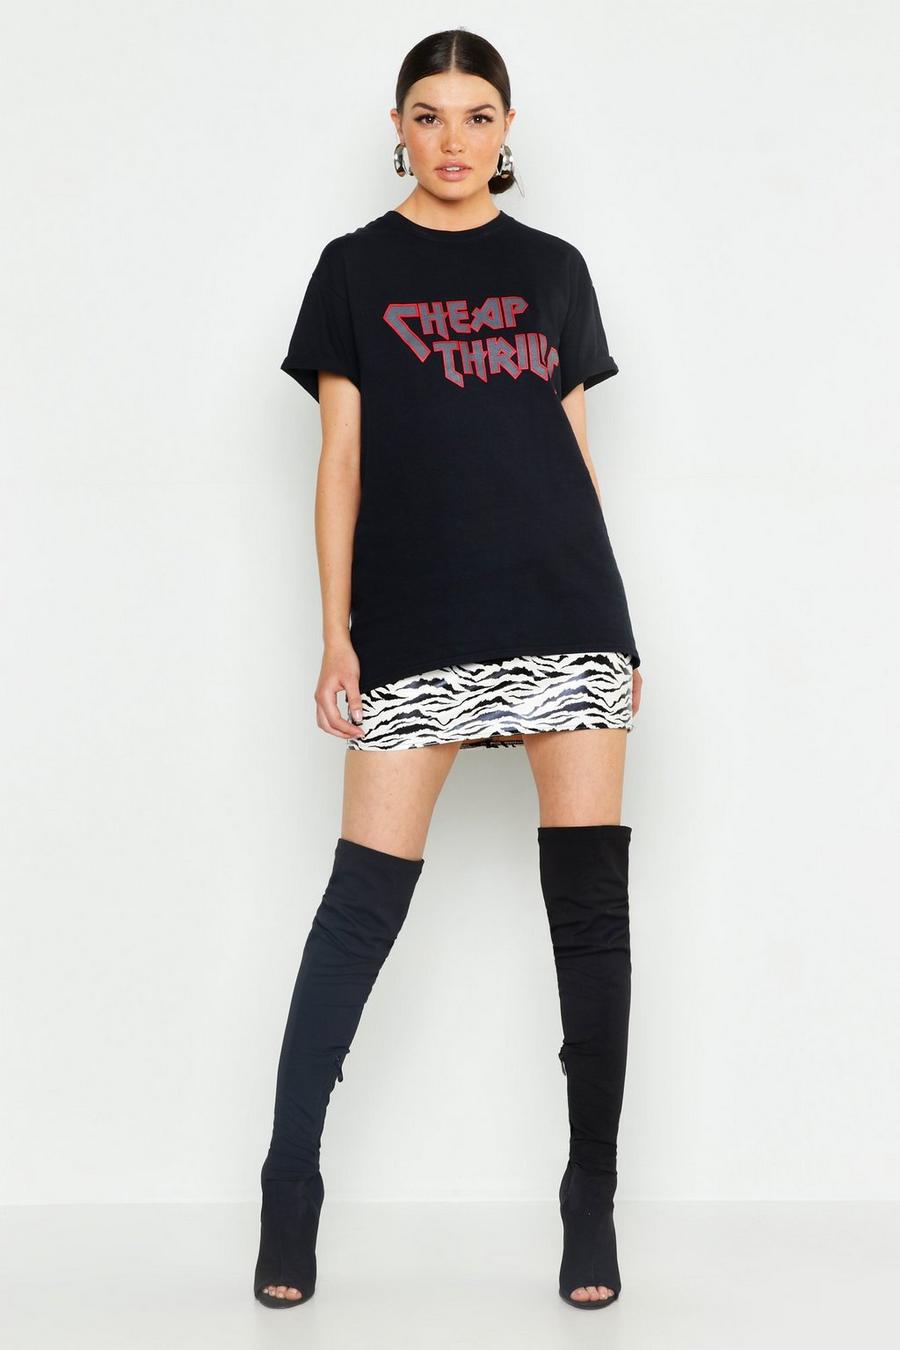 Black Cheap Thrills Slogan Rock T-Shirt